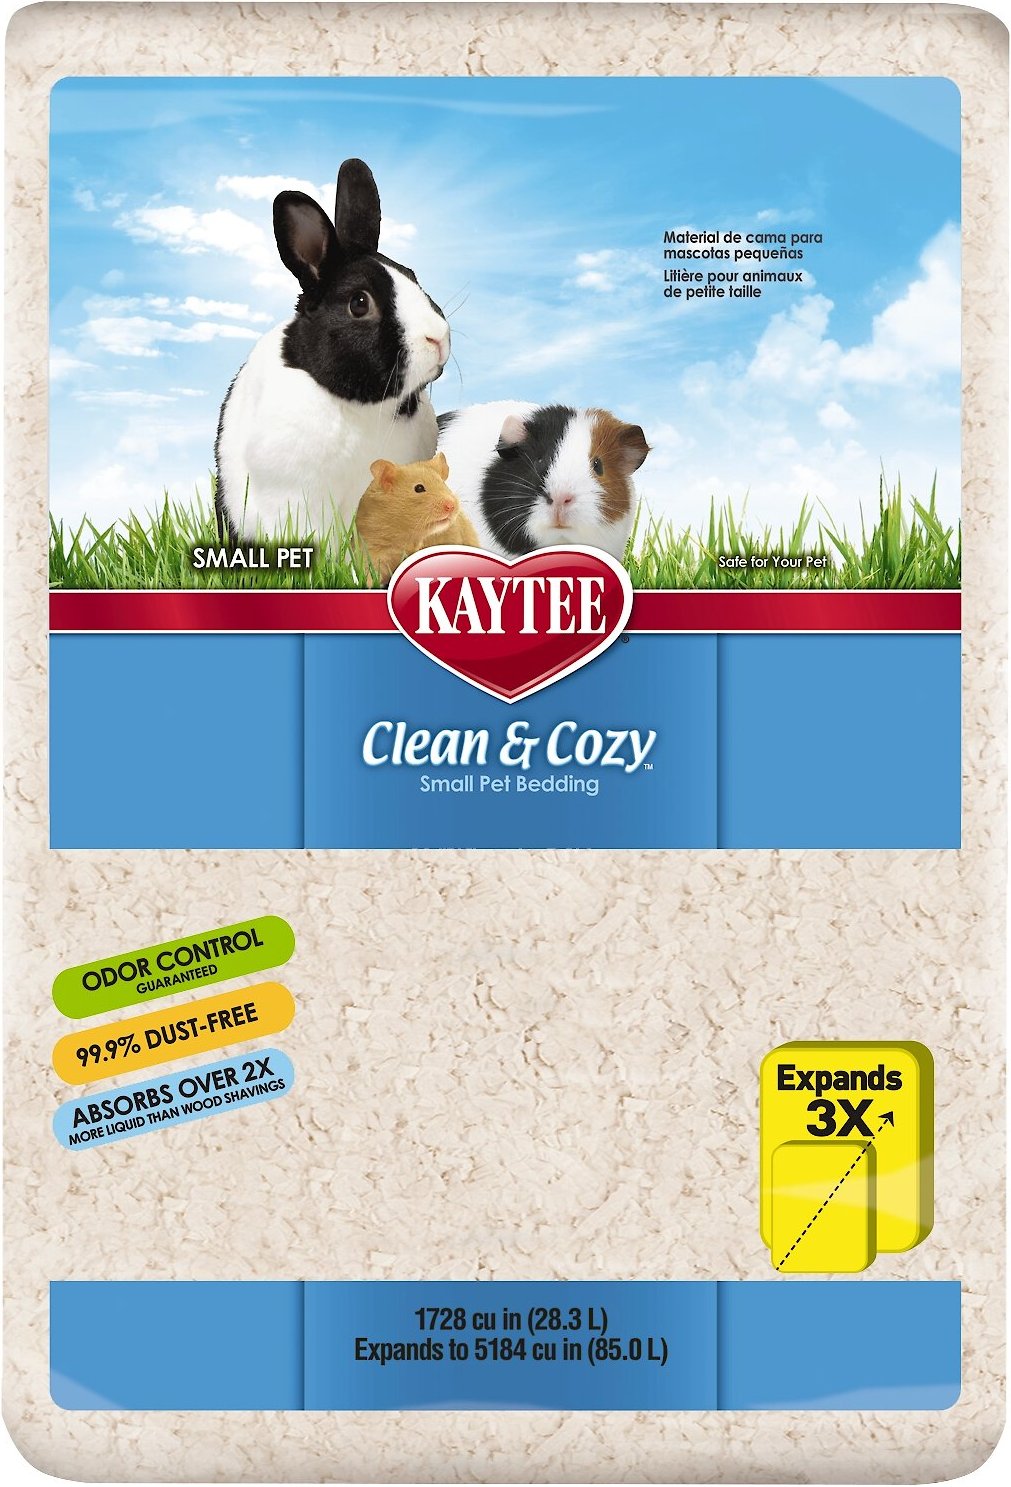 1. Kaytee Clean & Cozy Small Animal Bedding